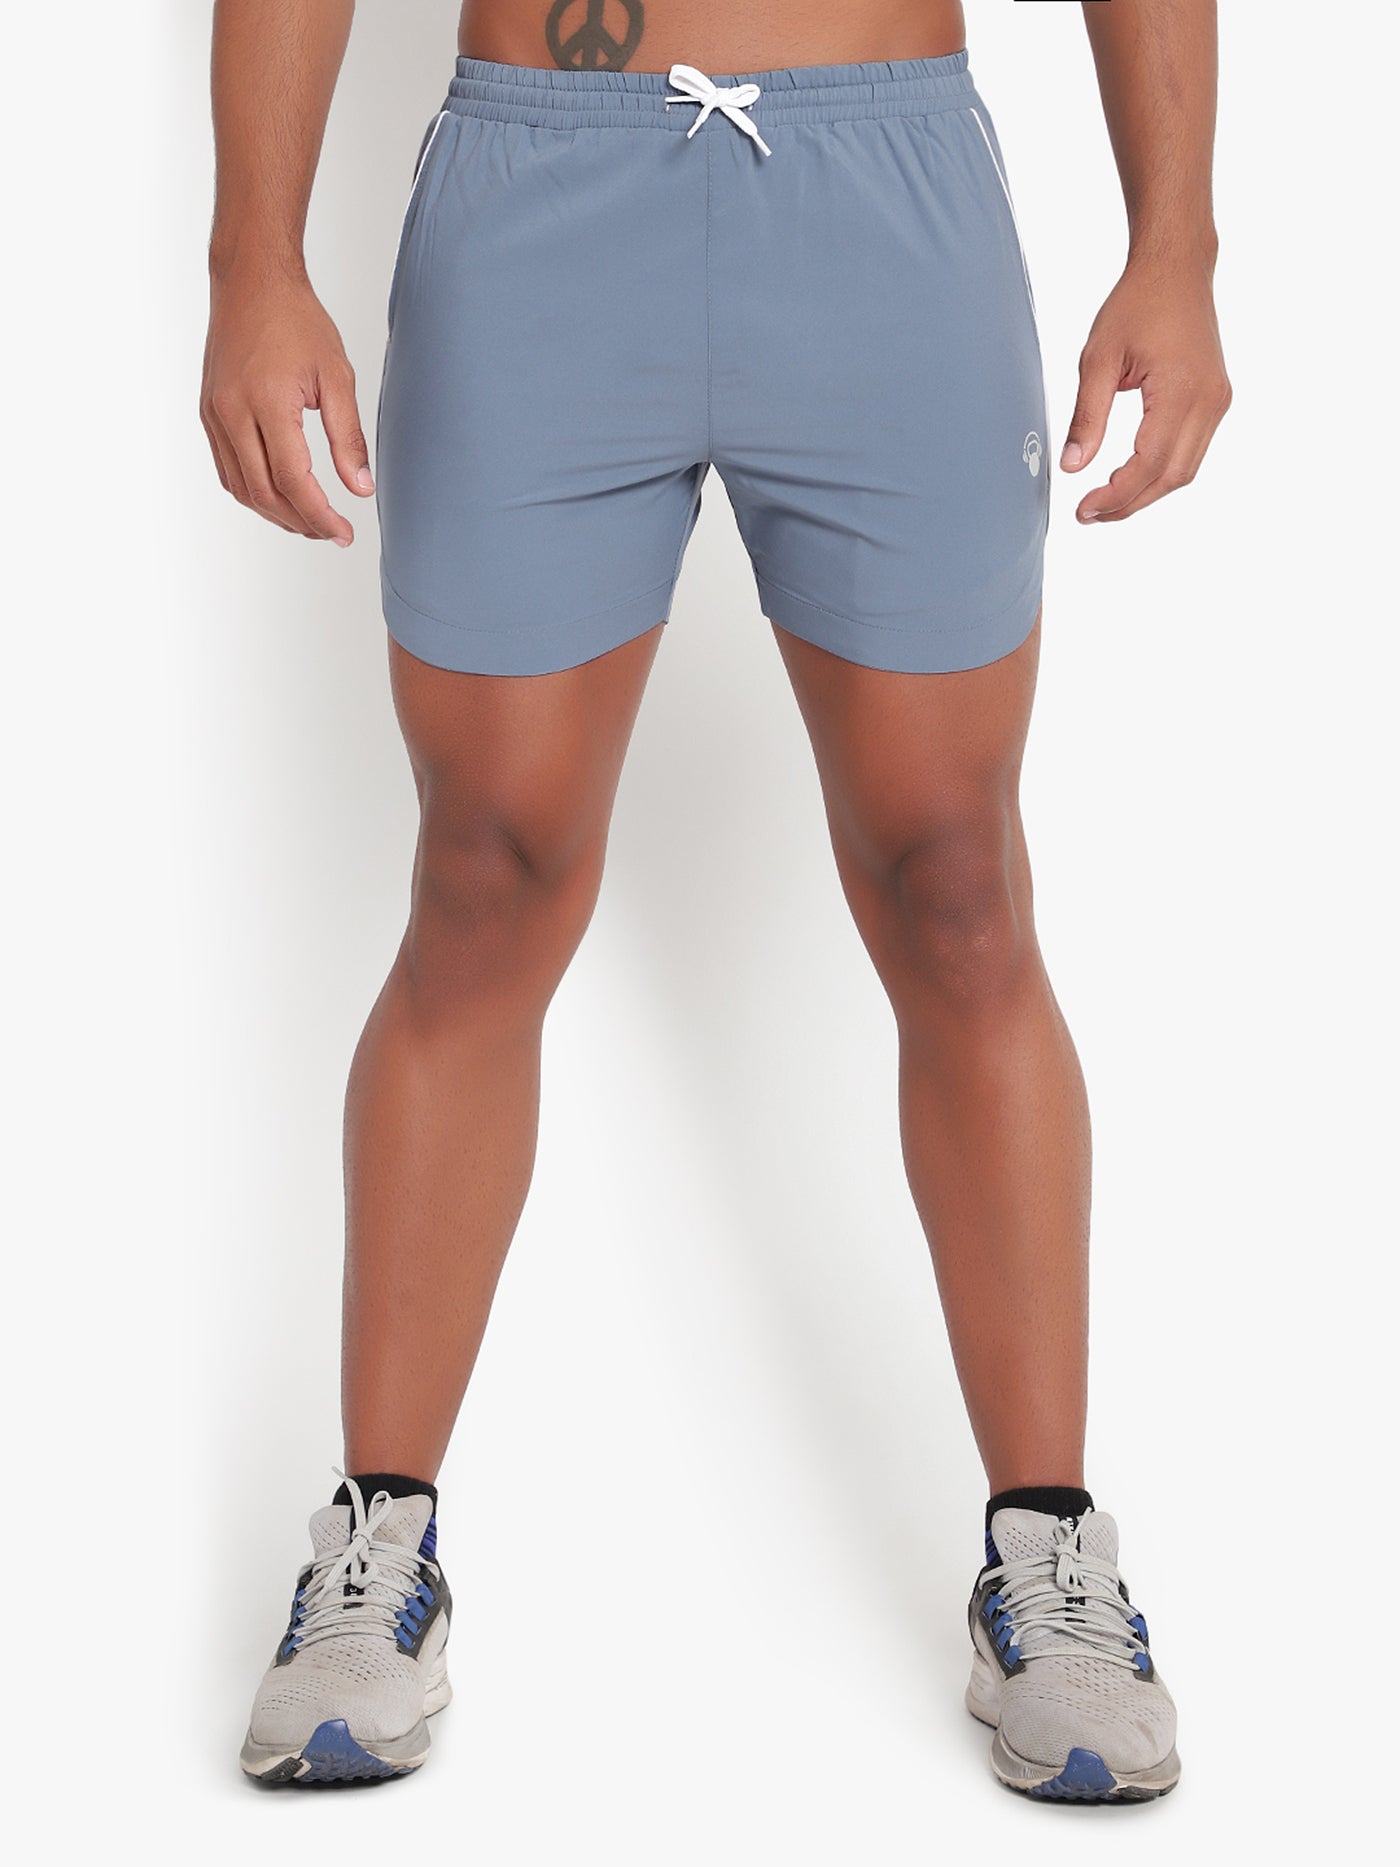 Define Shorts - Raw Steel